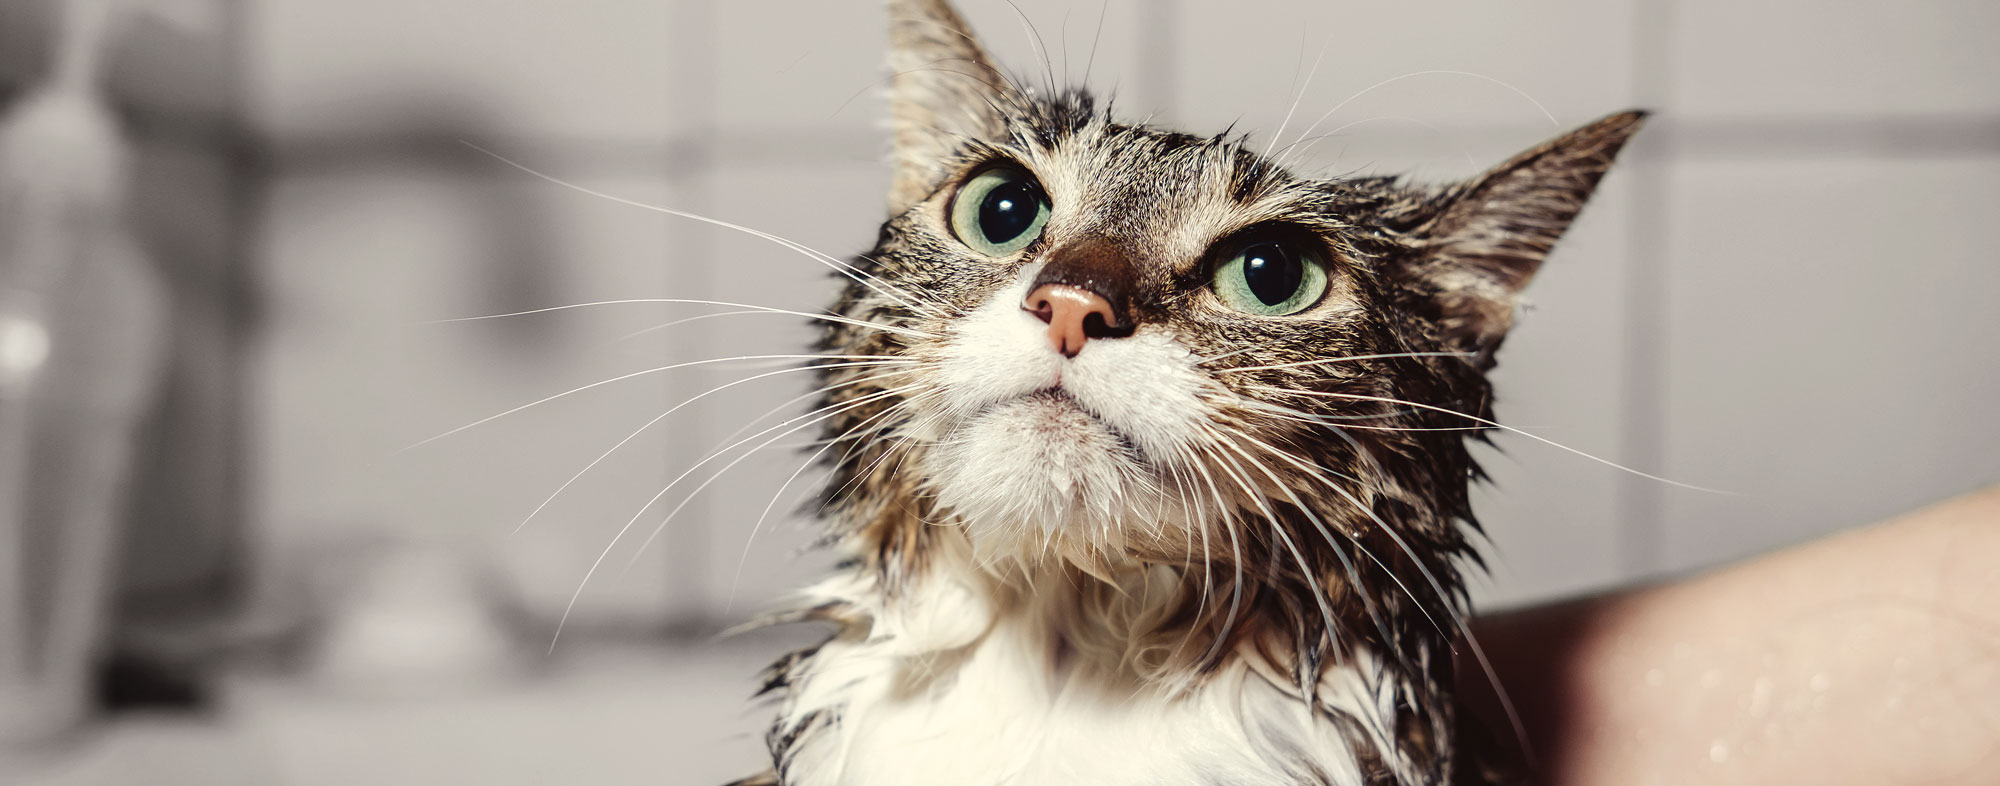 cat grooming flea bath